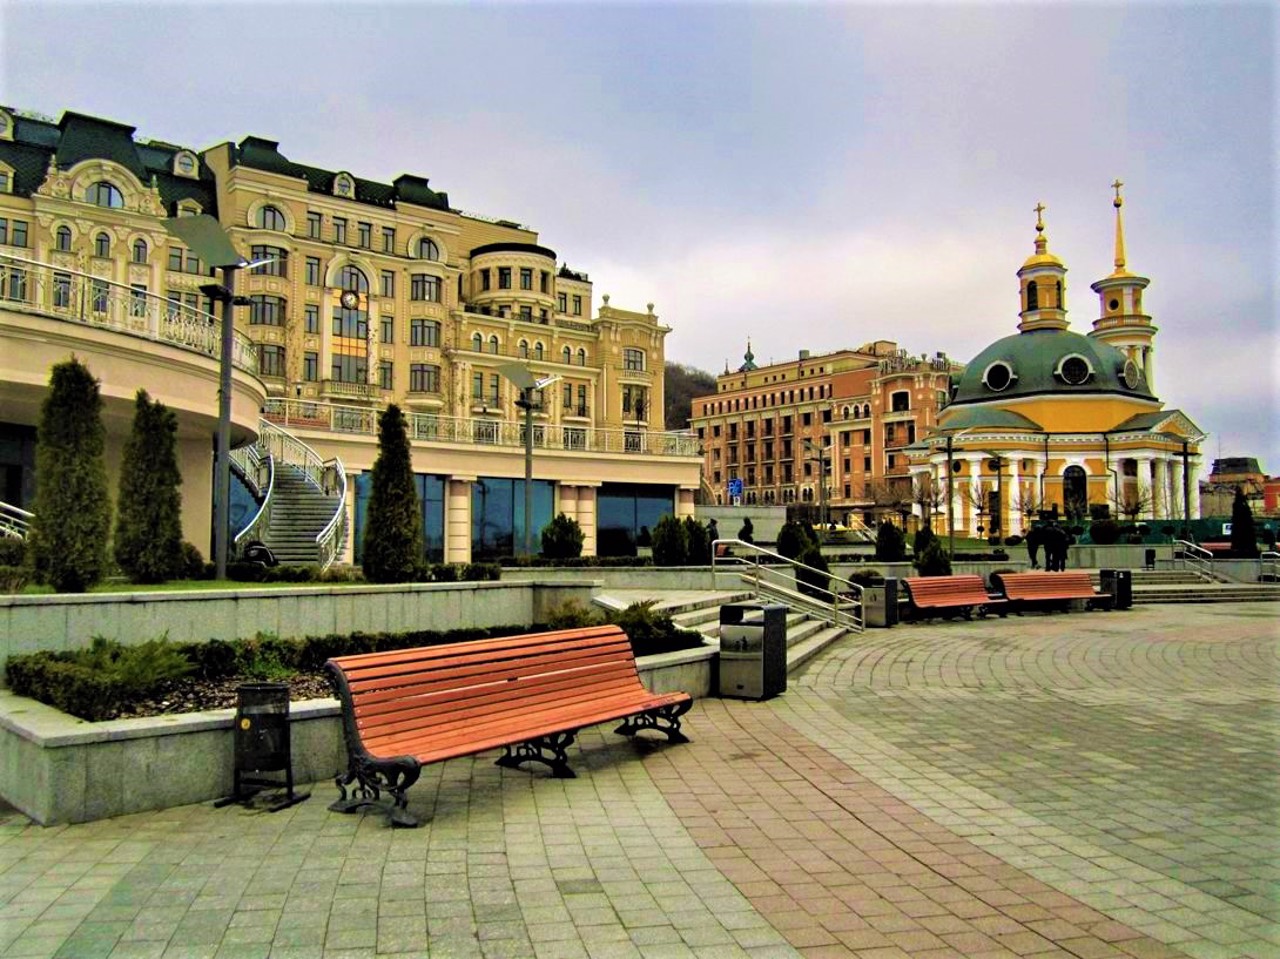 Поштова площа, Київ